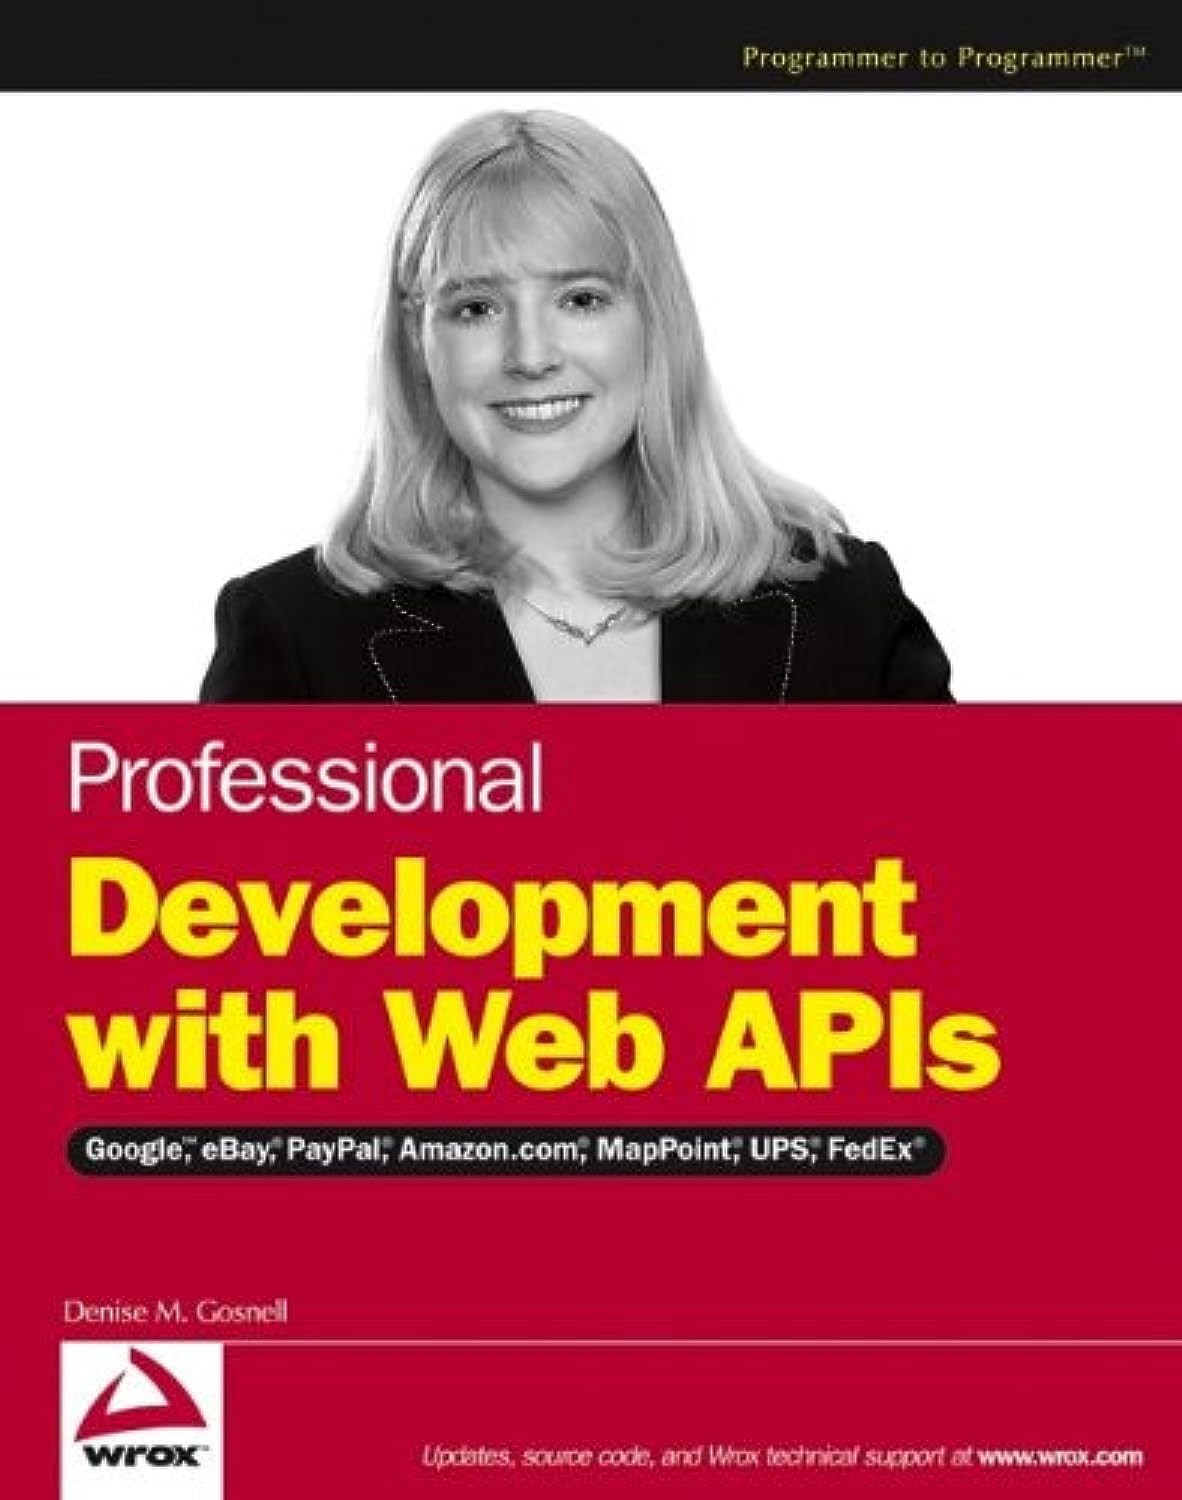 Professional Development With Web APIs: Google, eBay, Amazon.com, MapPoint, FedEx